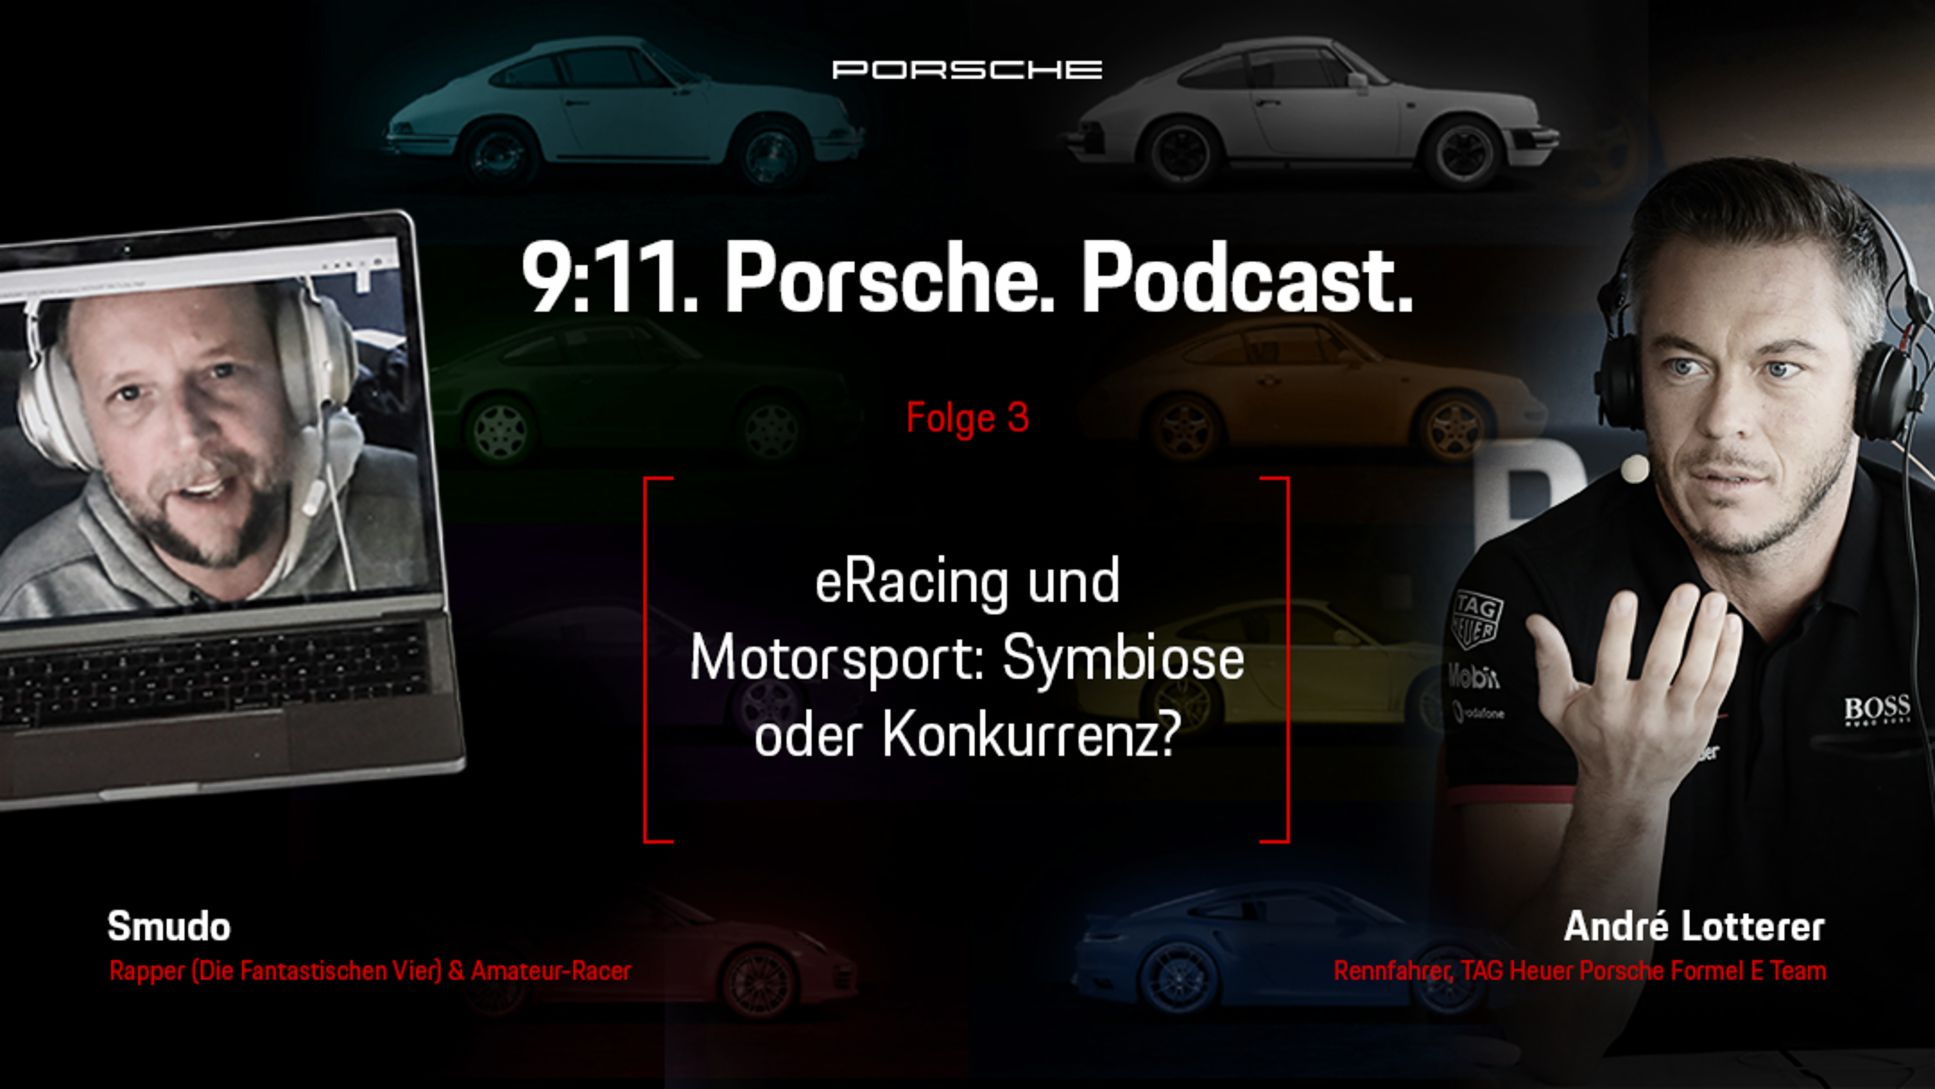 Smudo, Rapper, André Lotterer, Porsche-Werksfahrer, l-r, Podcast „9:11“, 2020, Porsche AG